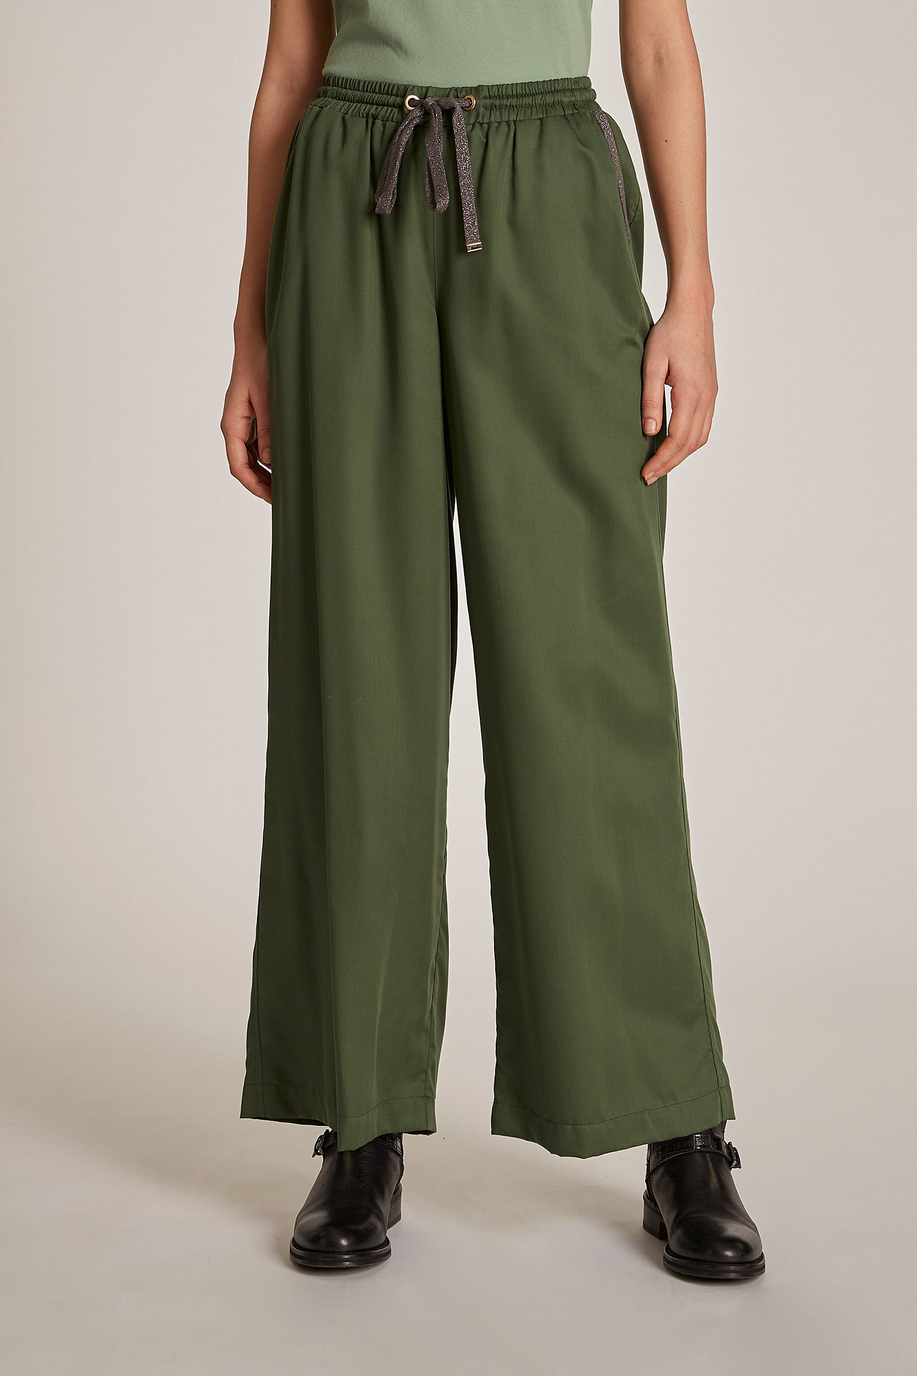 Pantalone da donna in lyocell regular fit | La Martina - Official Online Shop